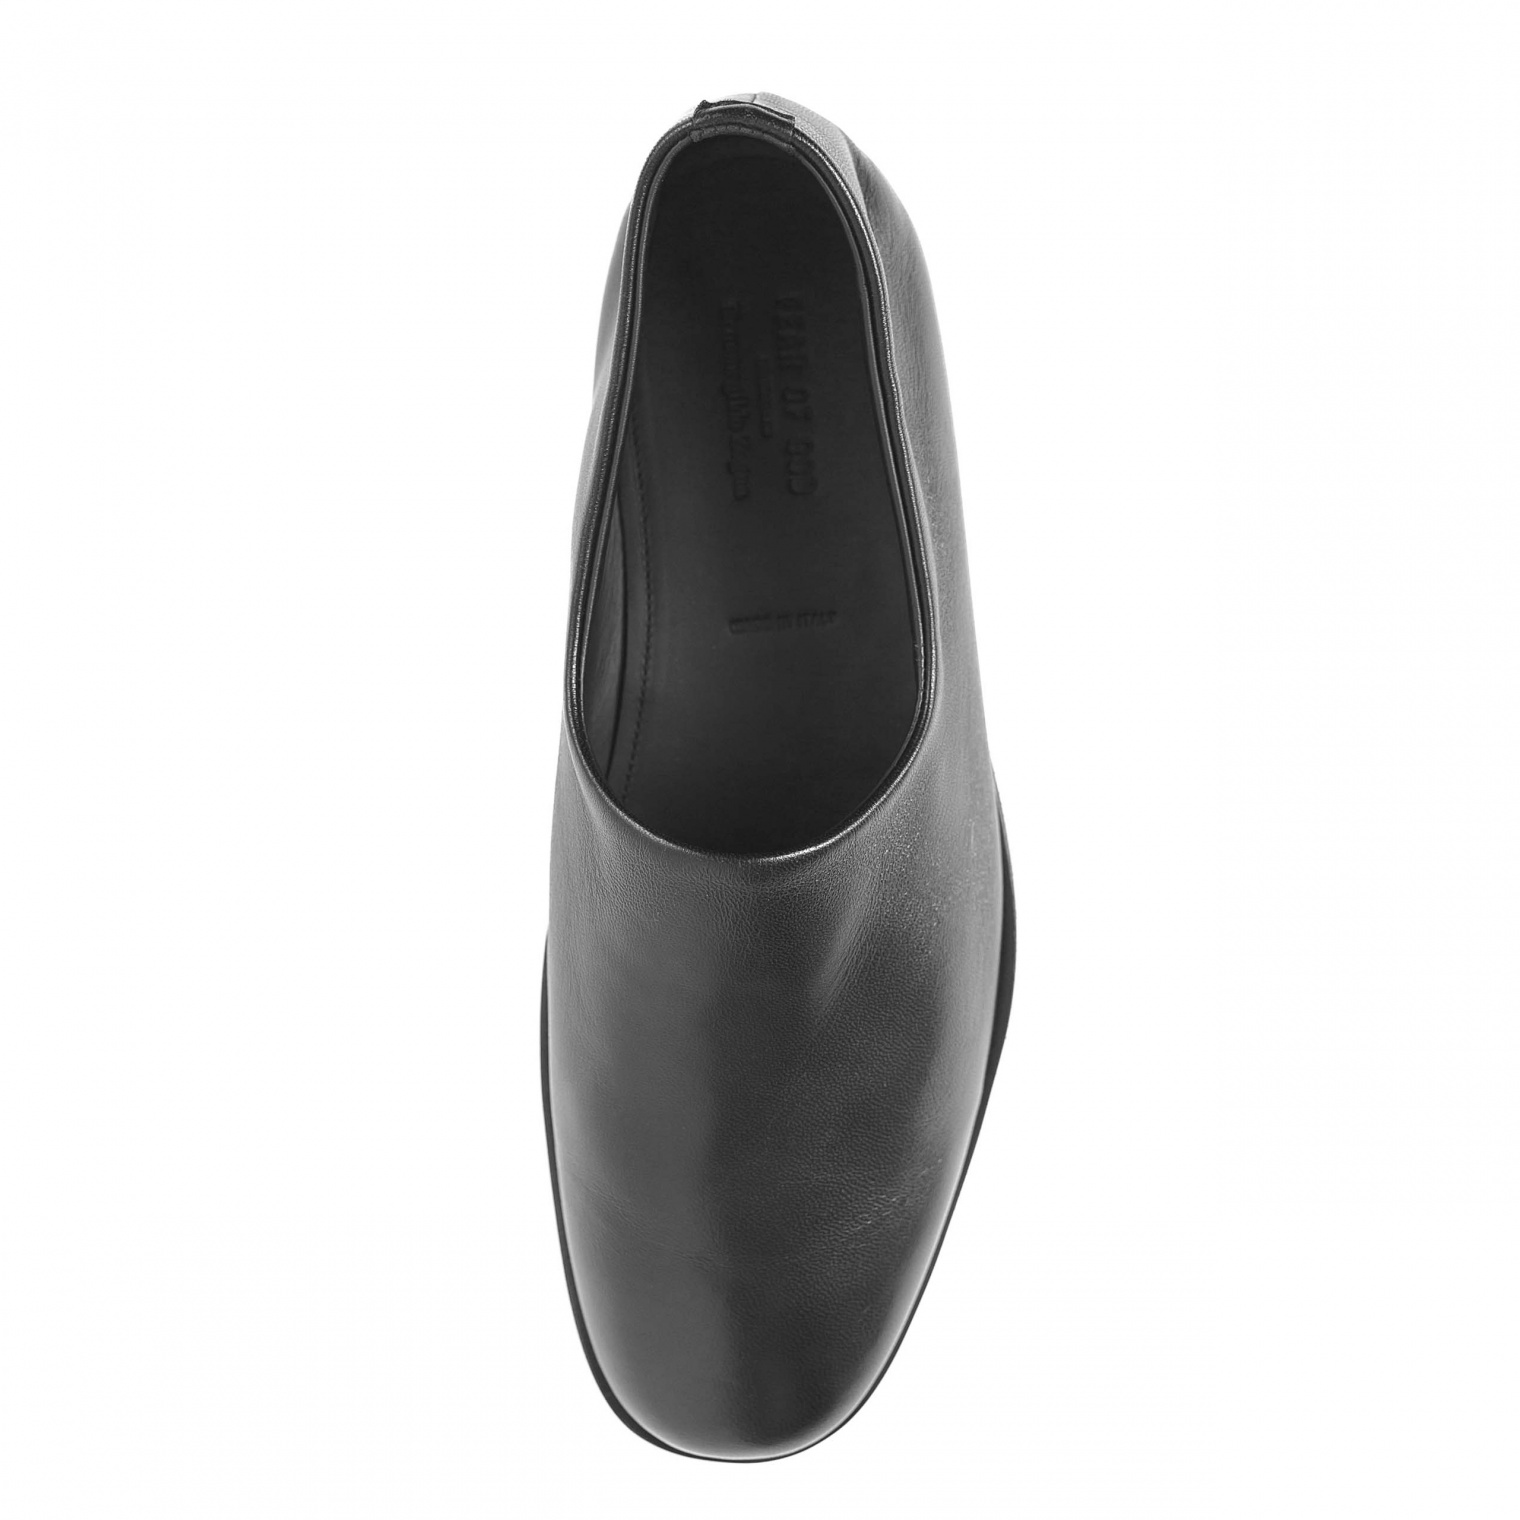 Buy Fear of God x Zegna men black leather shoes for $970 online on 